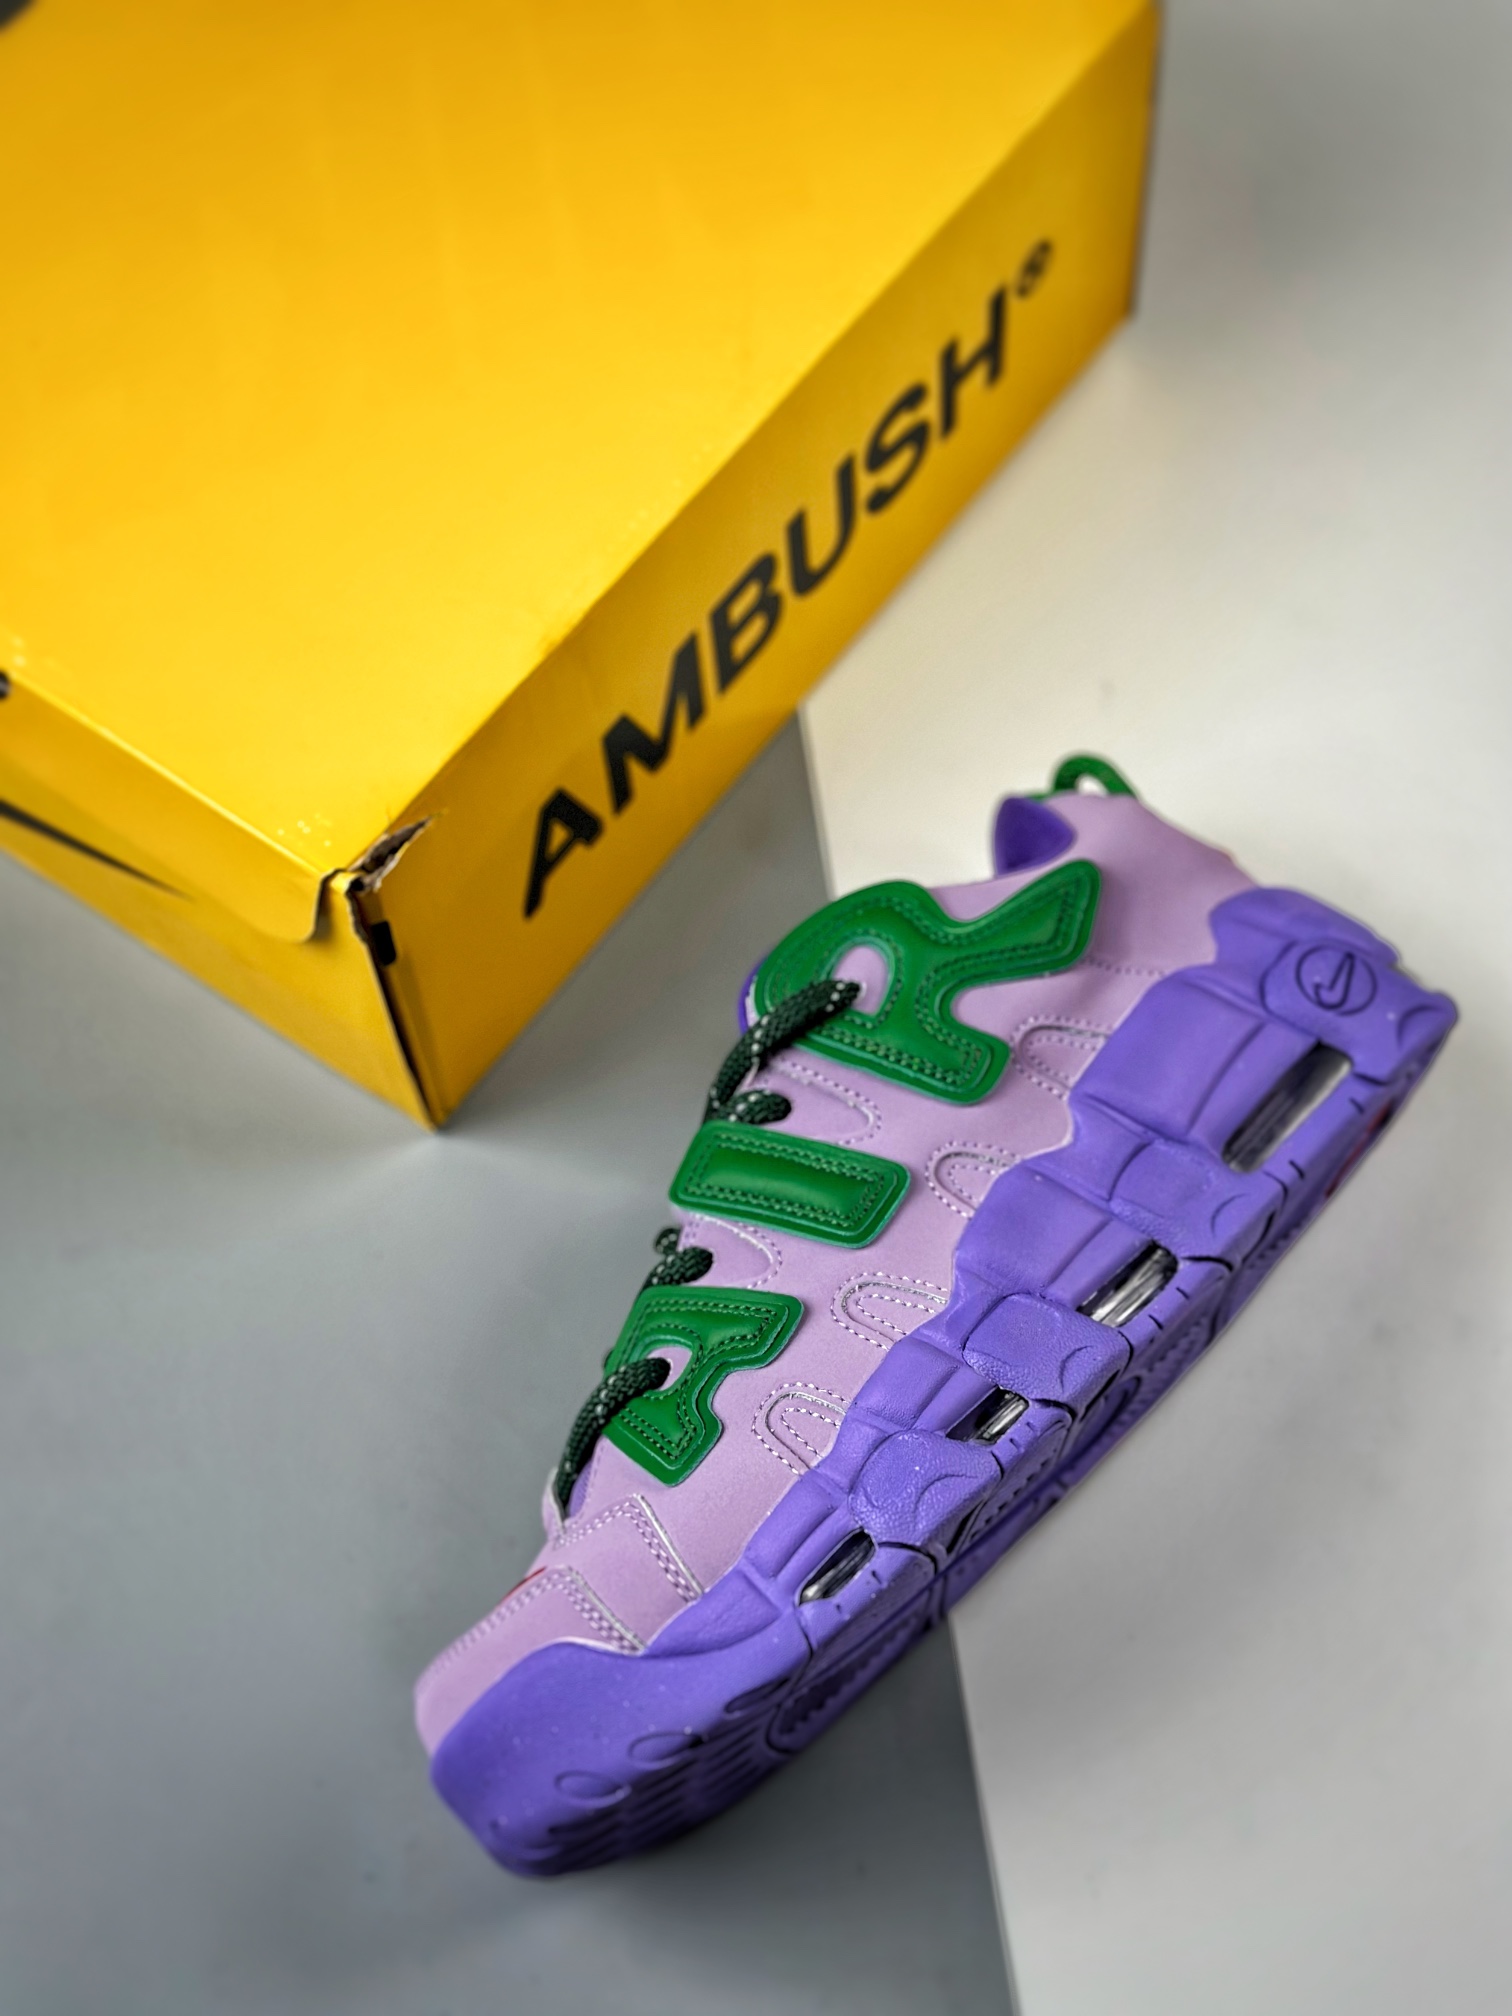 AMBUSH × Nike Air More Uptempo Low 